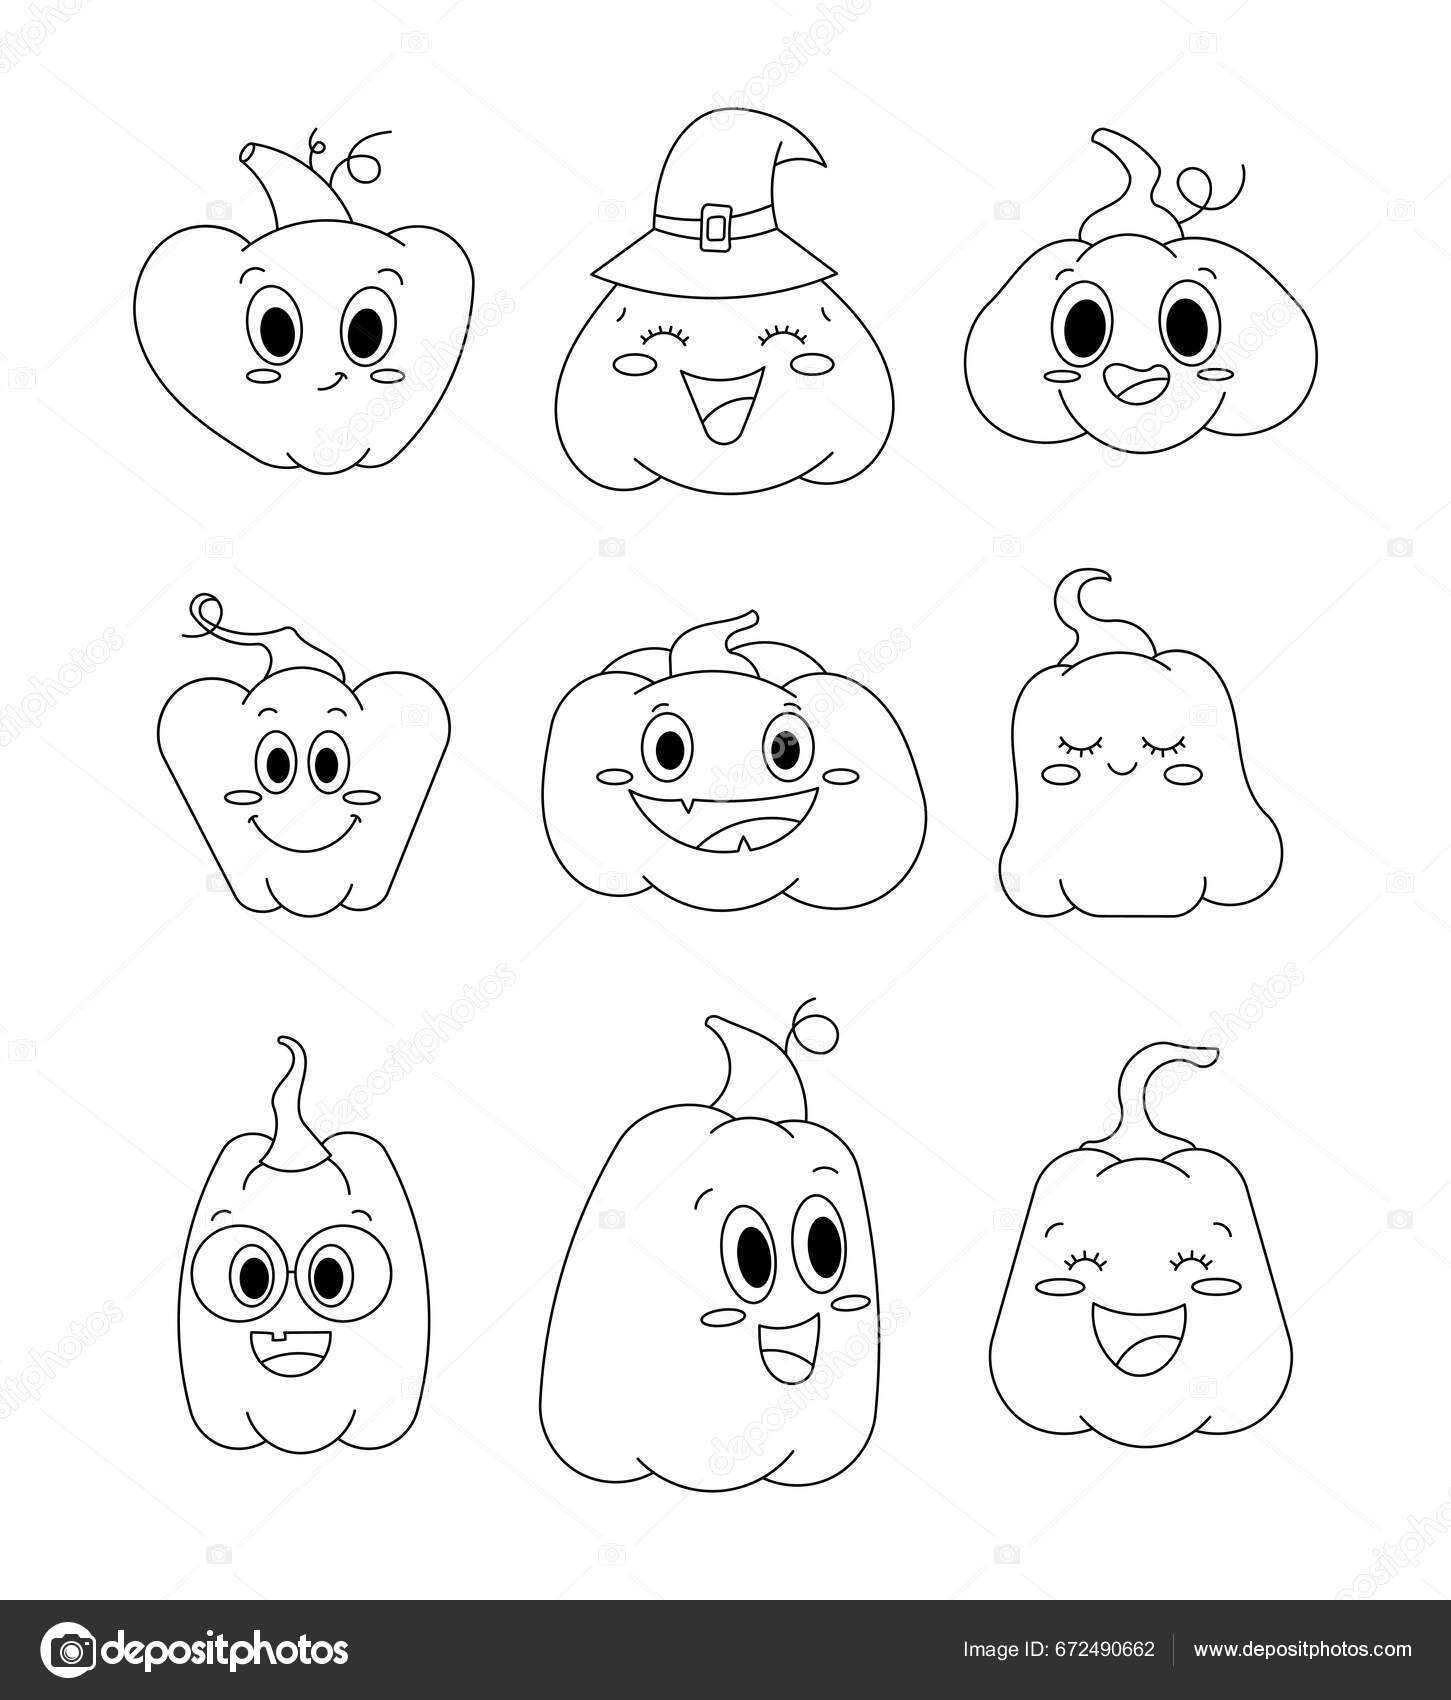 Pumpkin character cartoon coloring page beautiful cute vegetable halloween holiday stock vector by palau